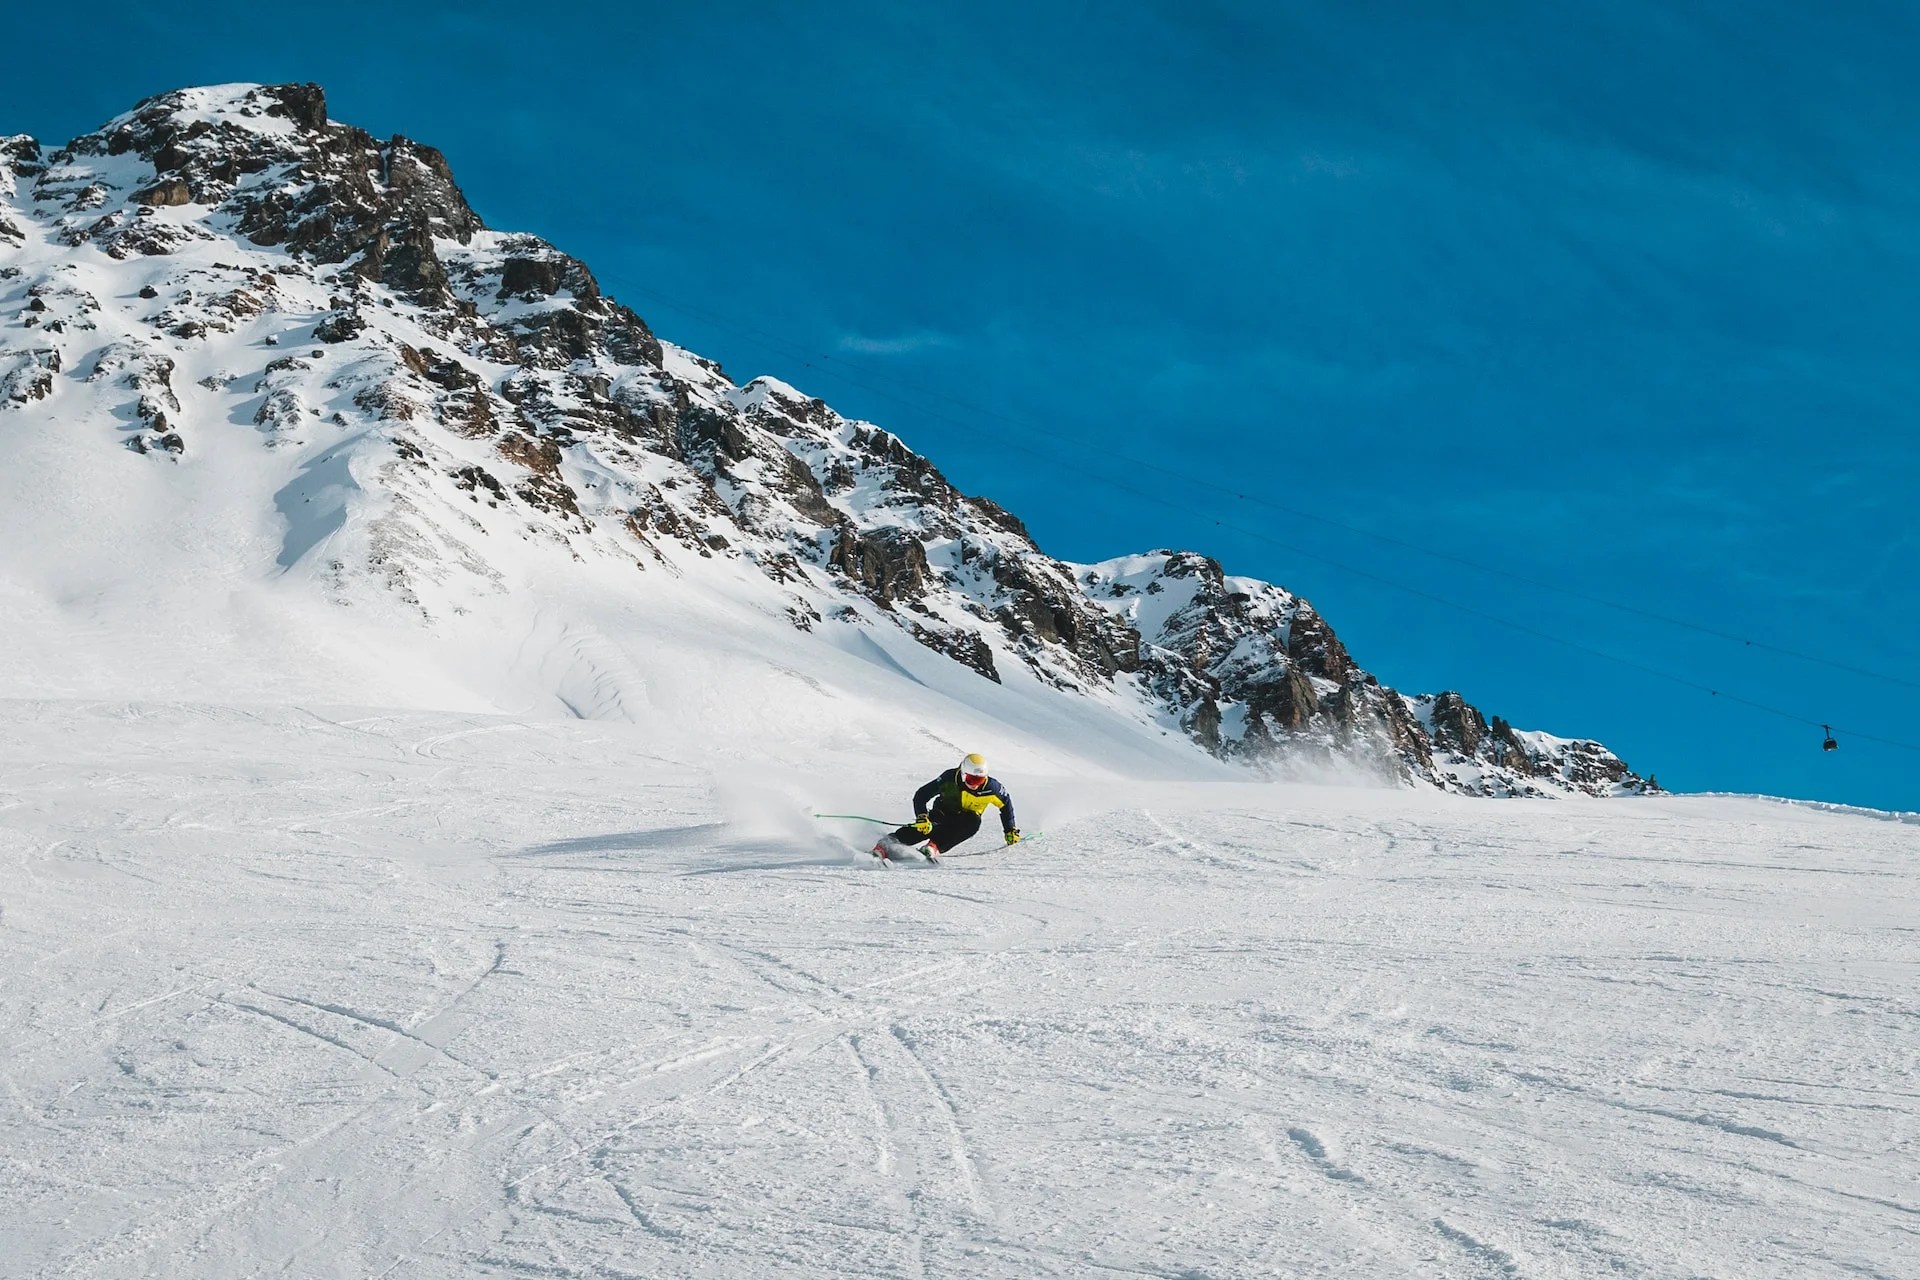 a person skiing down a mountain